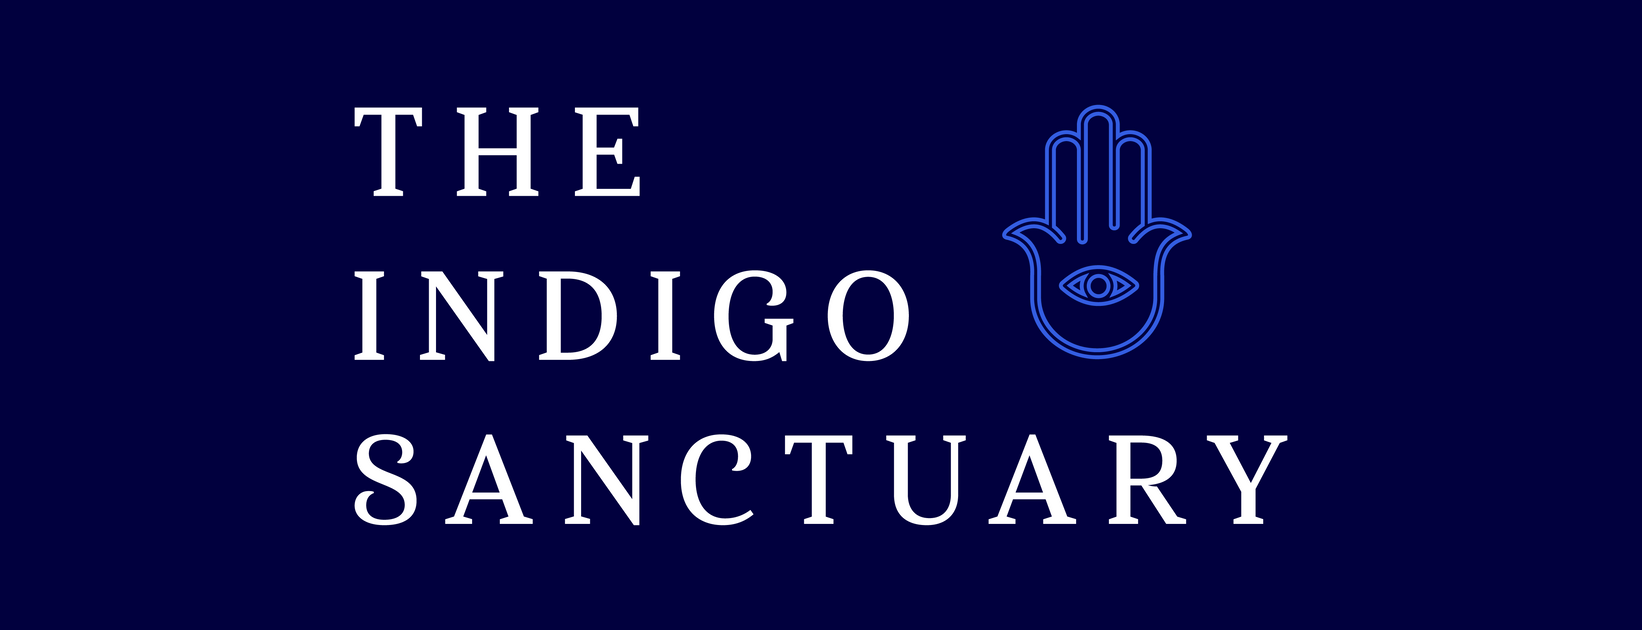 The Indigo Sanctuary